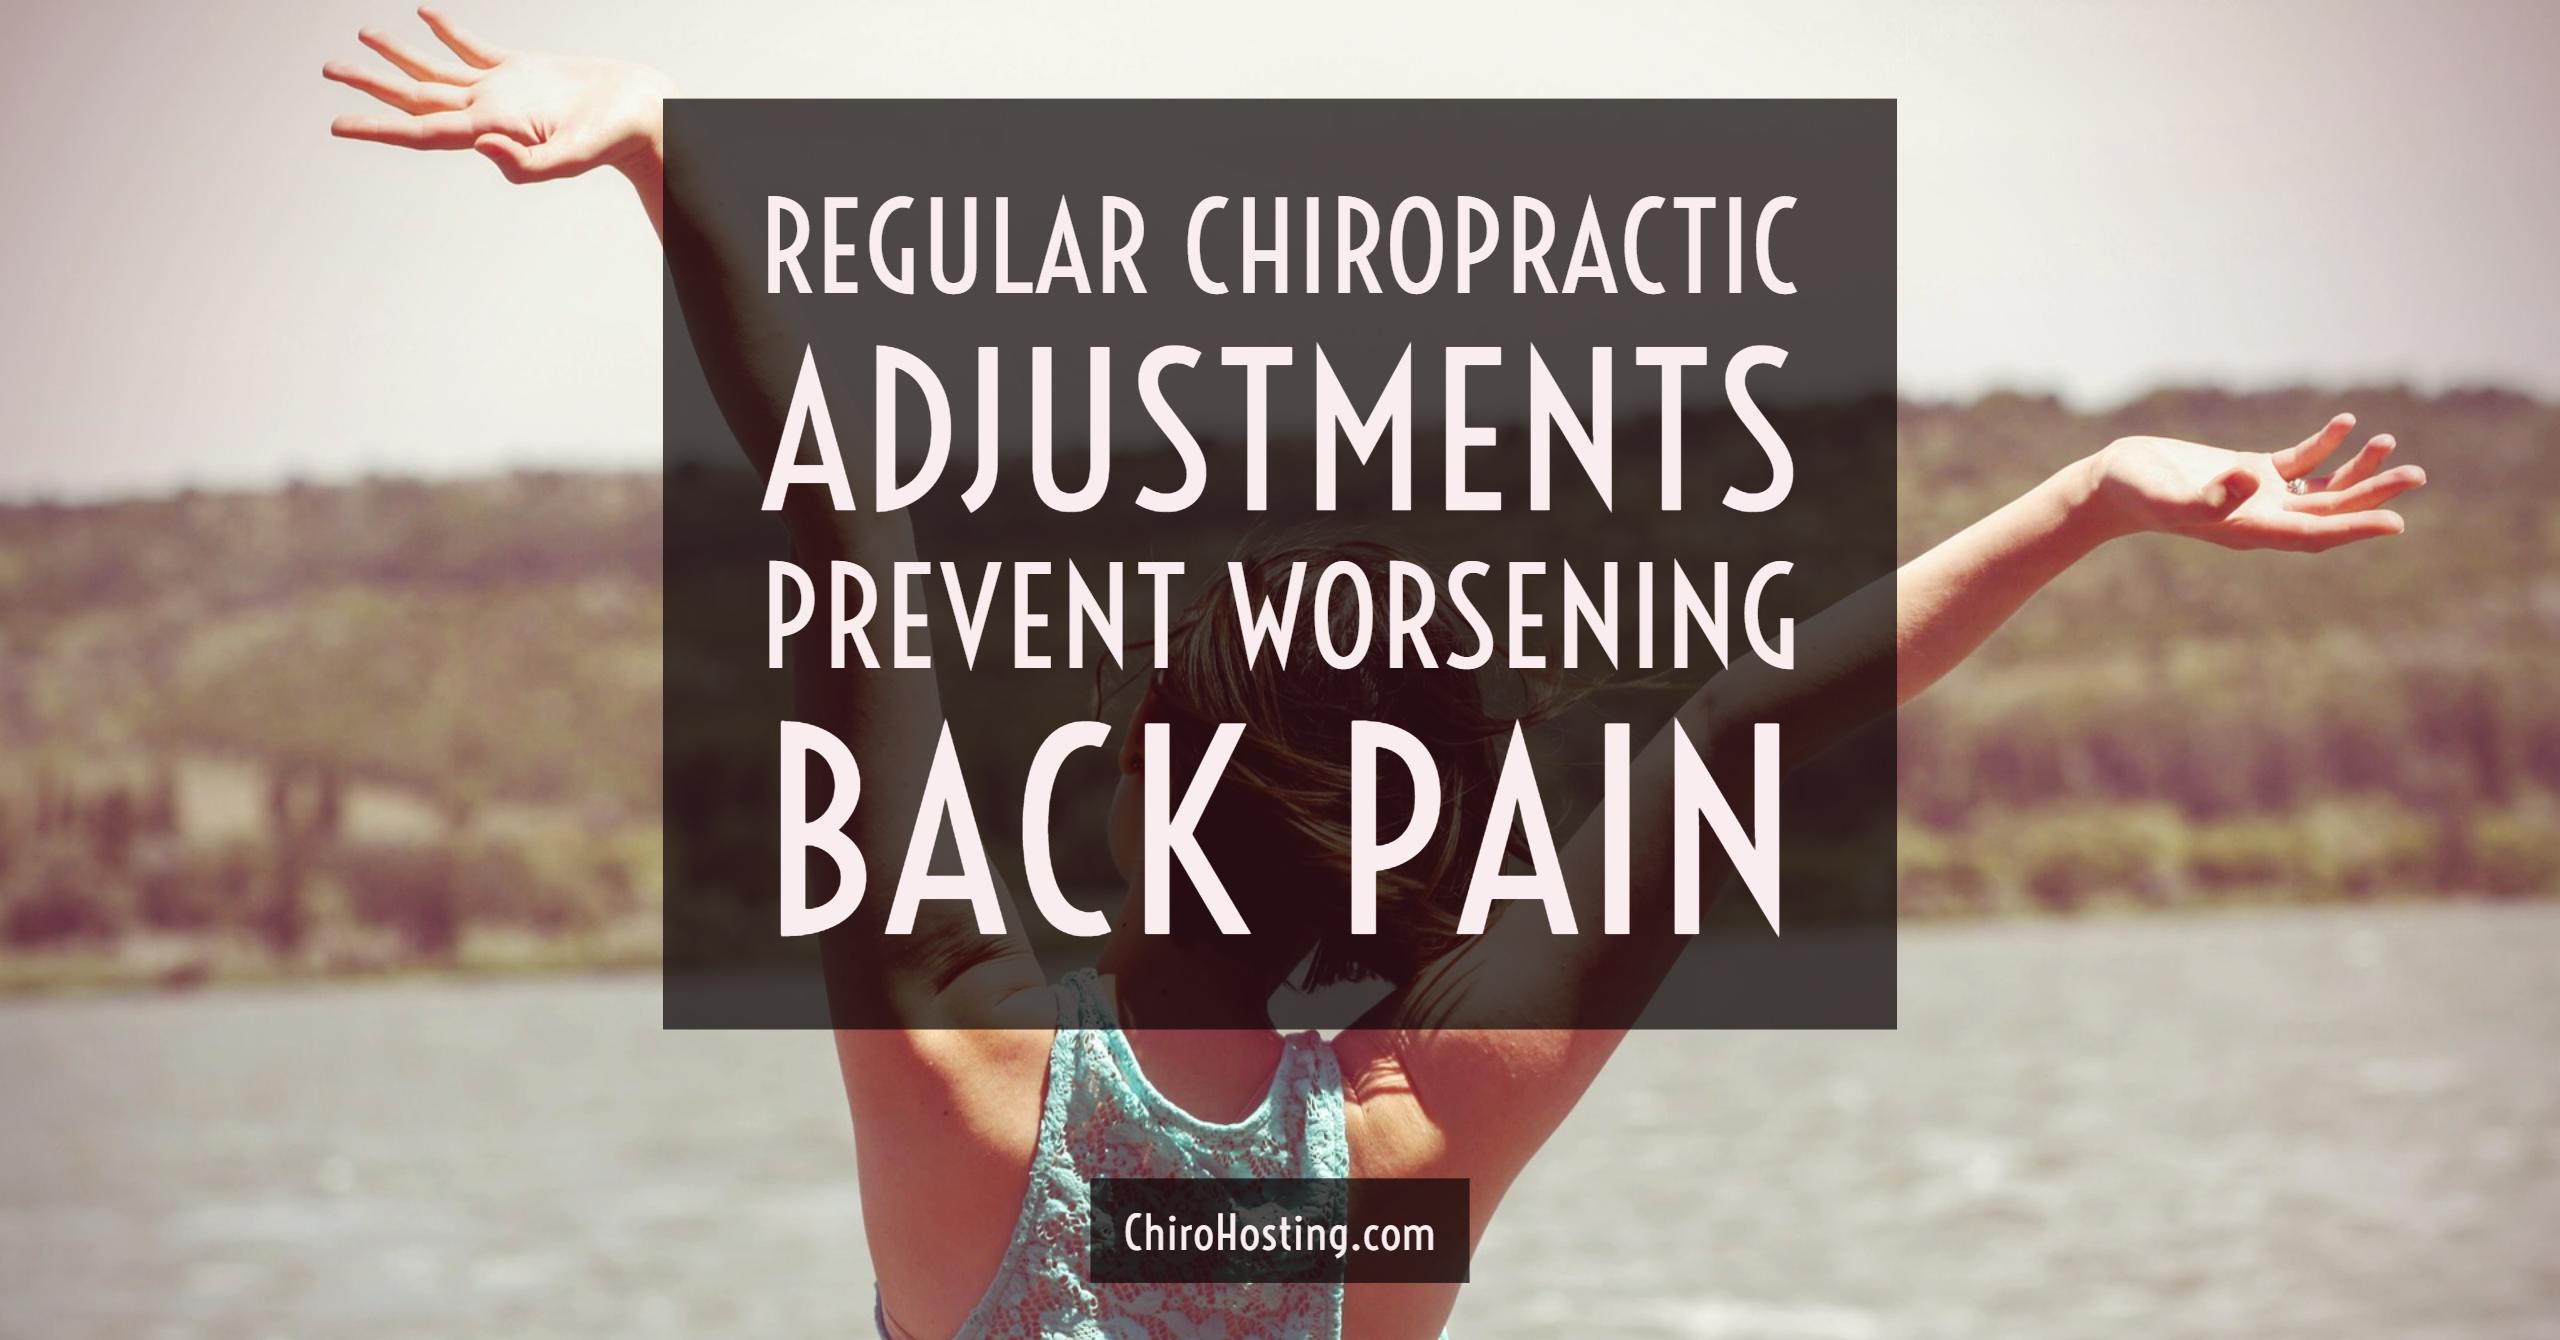 Regular Chiropractic Adjustments Prevent Worsening Back Pain, Study Finds